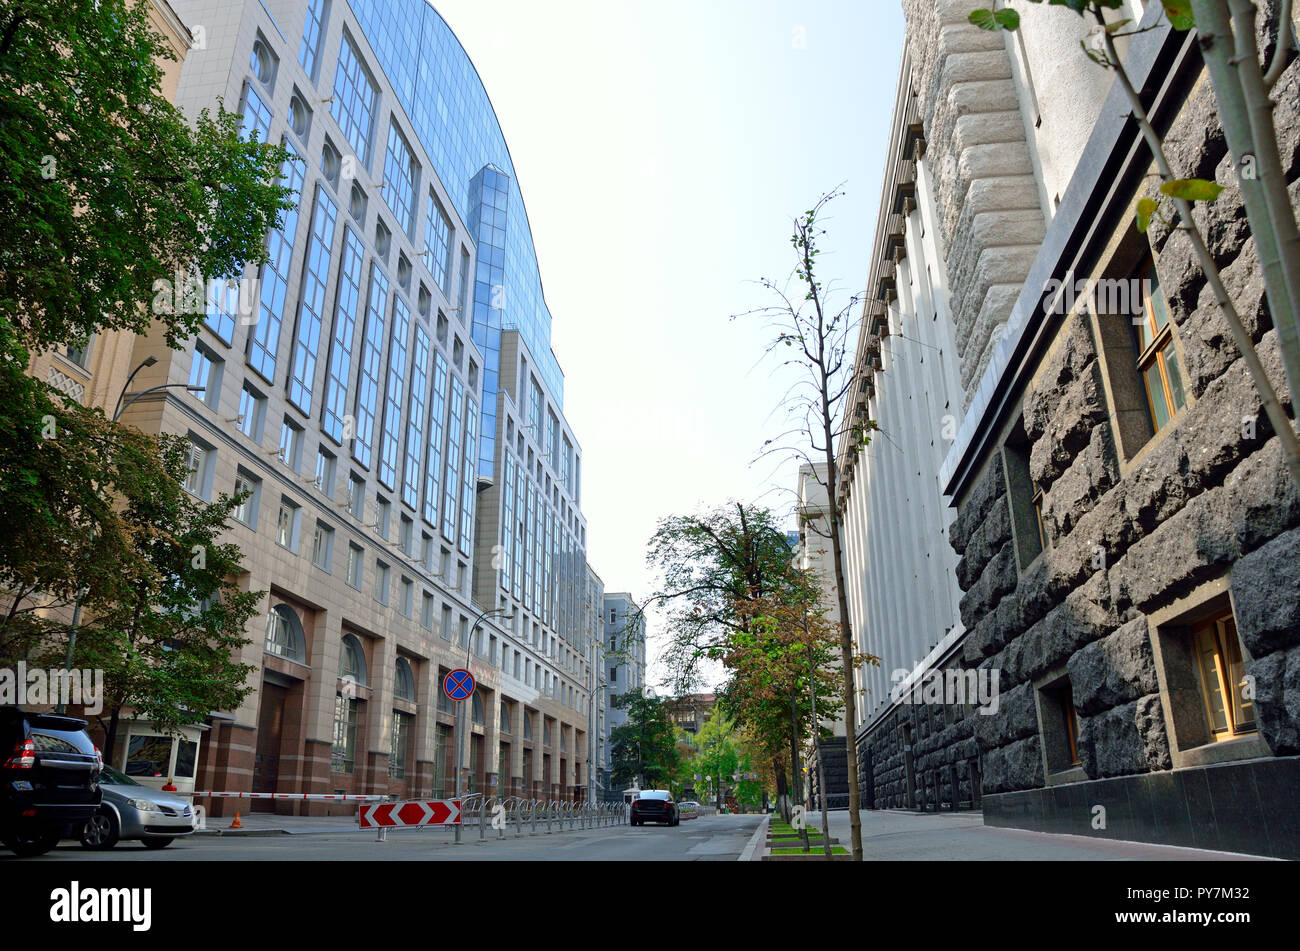 Sadova street in Kiev with governmental buildings, modern and soviet architecture, Ukraine Stock Photo